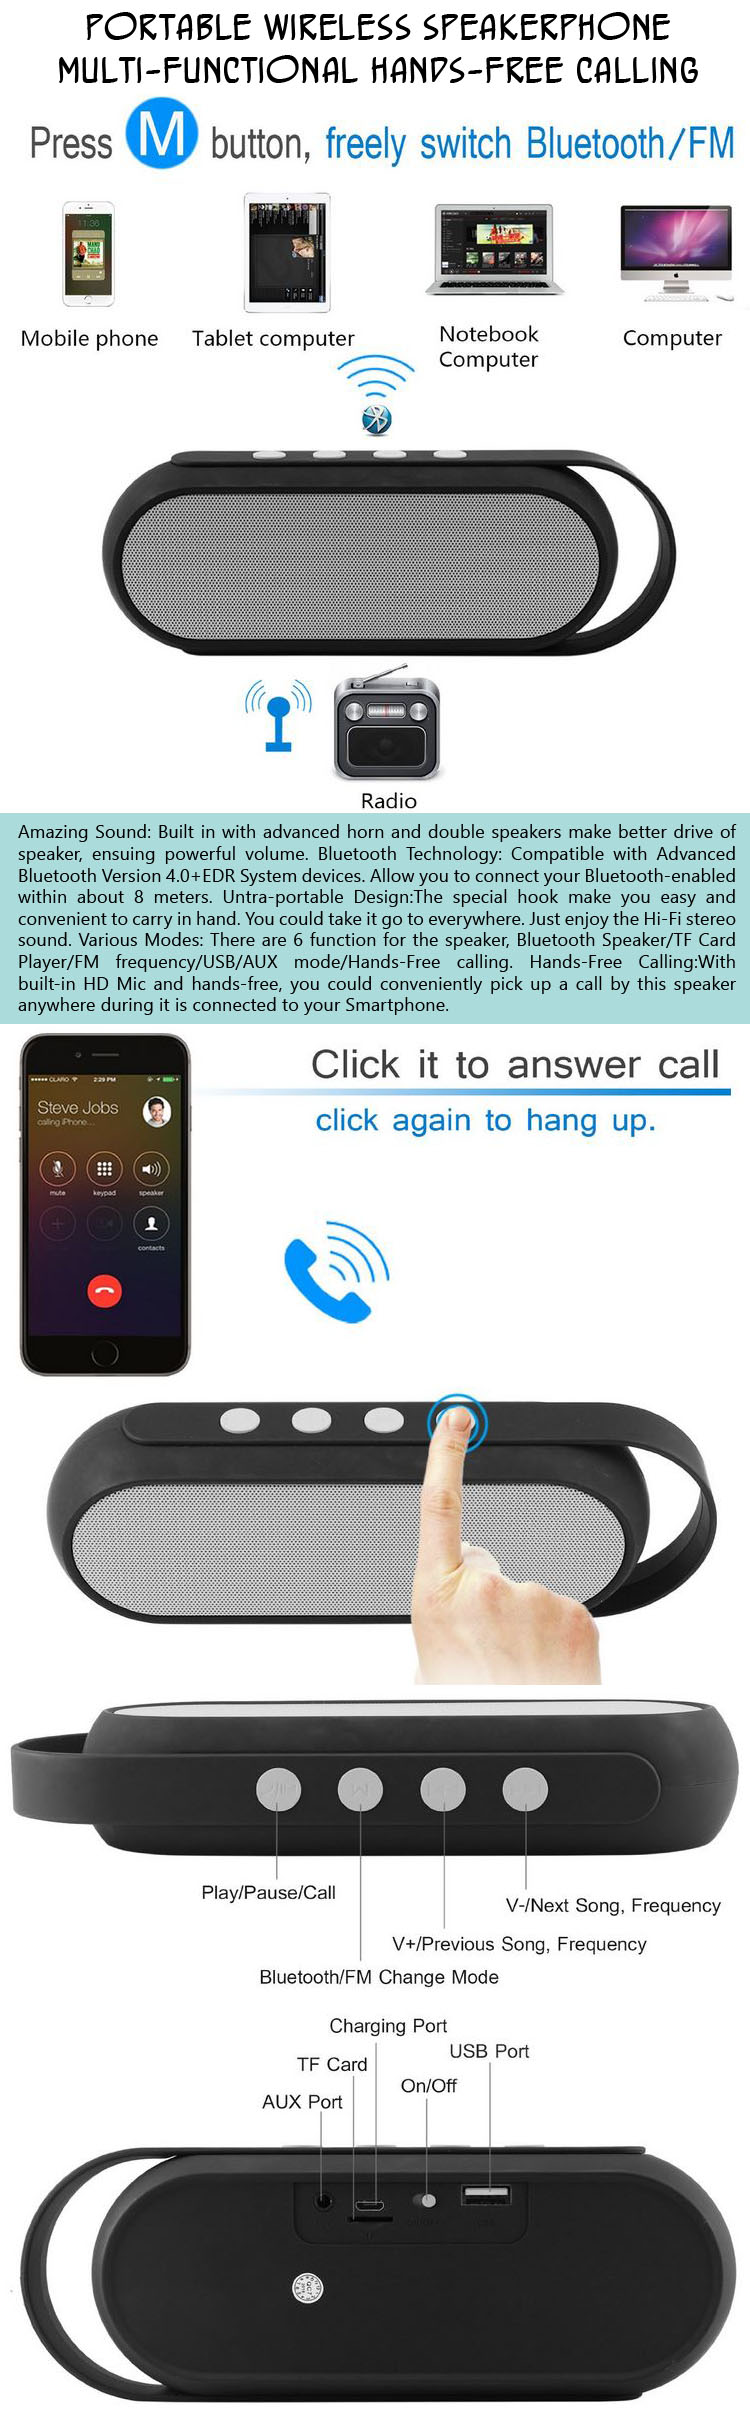 Wireless speaker phone